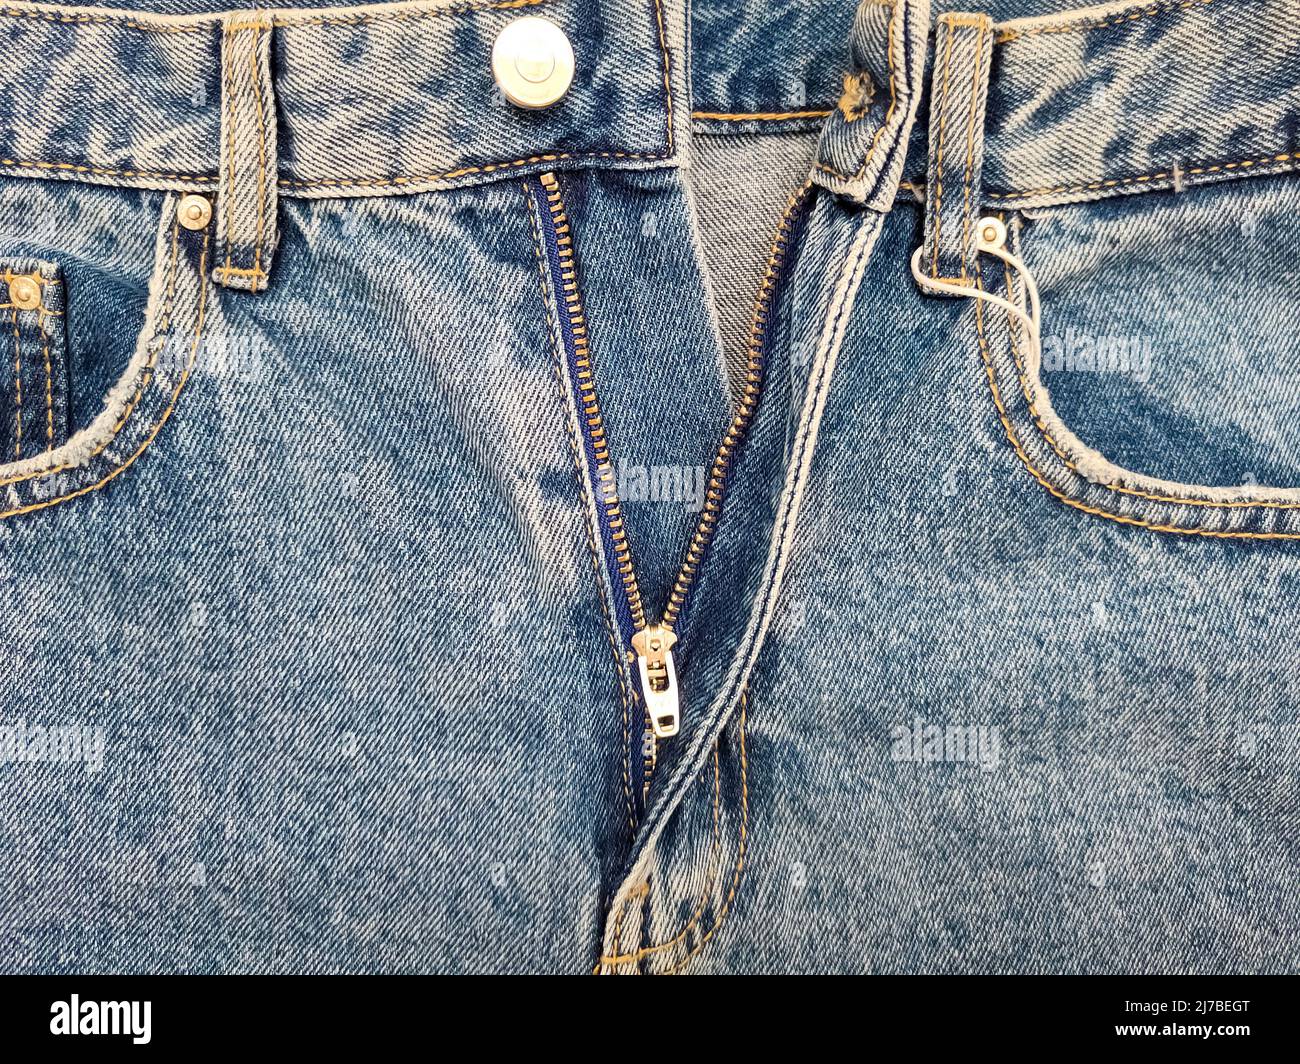 Zipper on jeans. Jeans texture. Close-up denim background. Unzipped ...